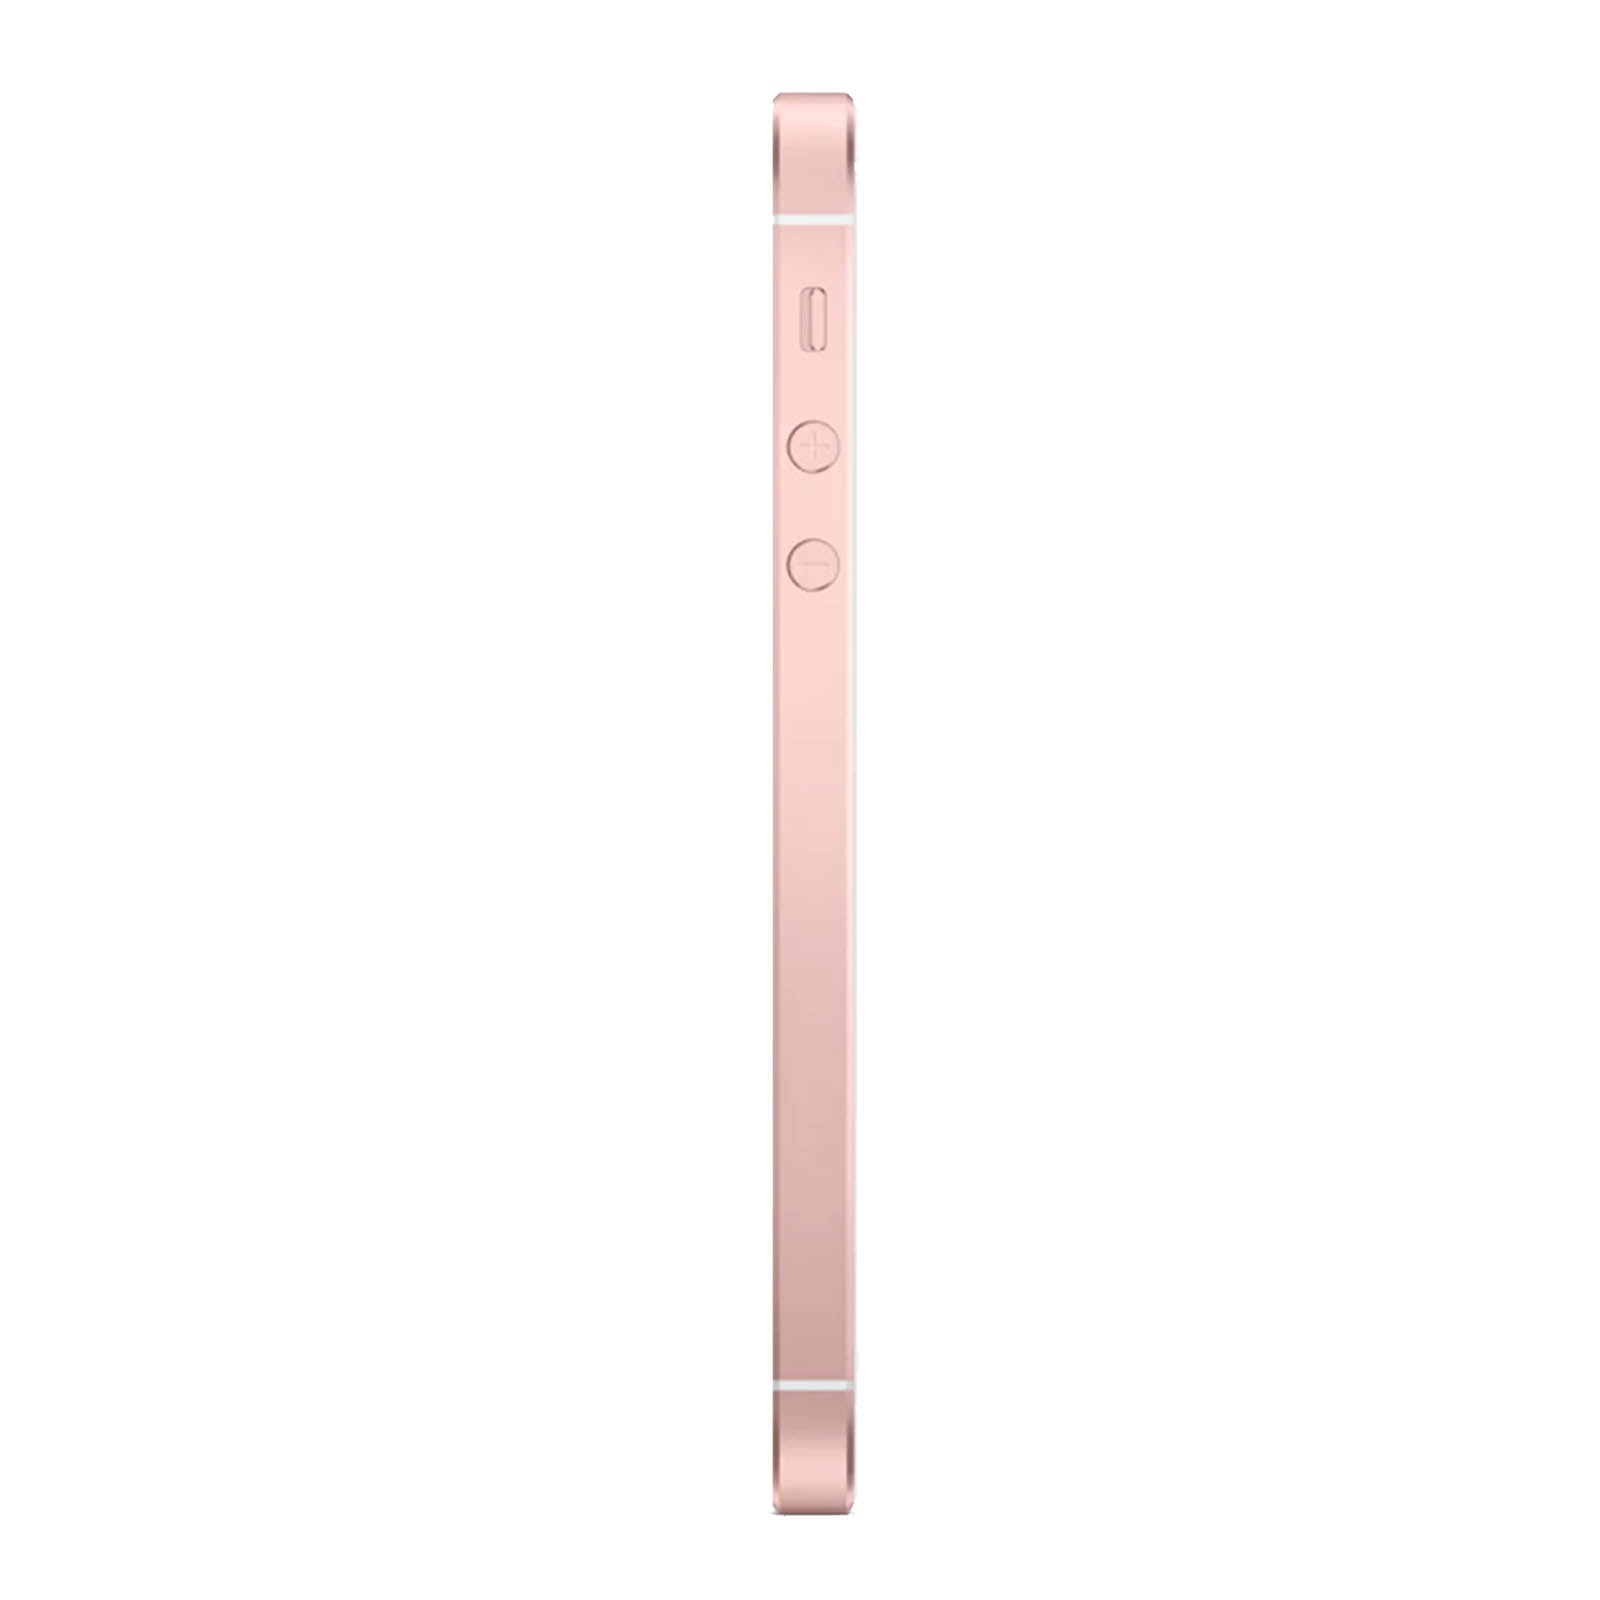 Apple iPhone SE 32GB Rose Gold Good - Unlocked